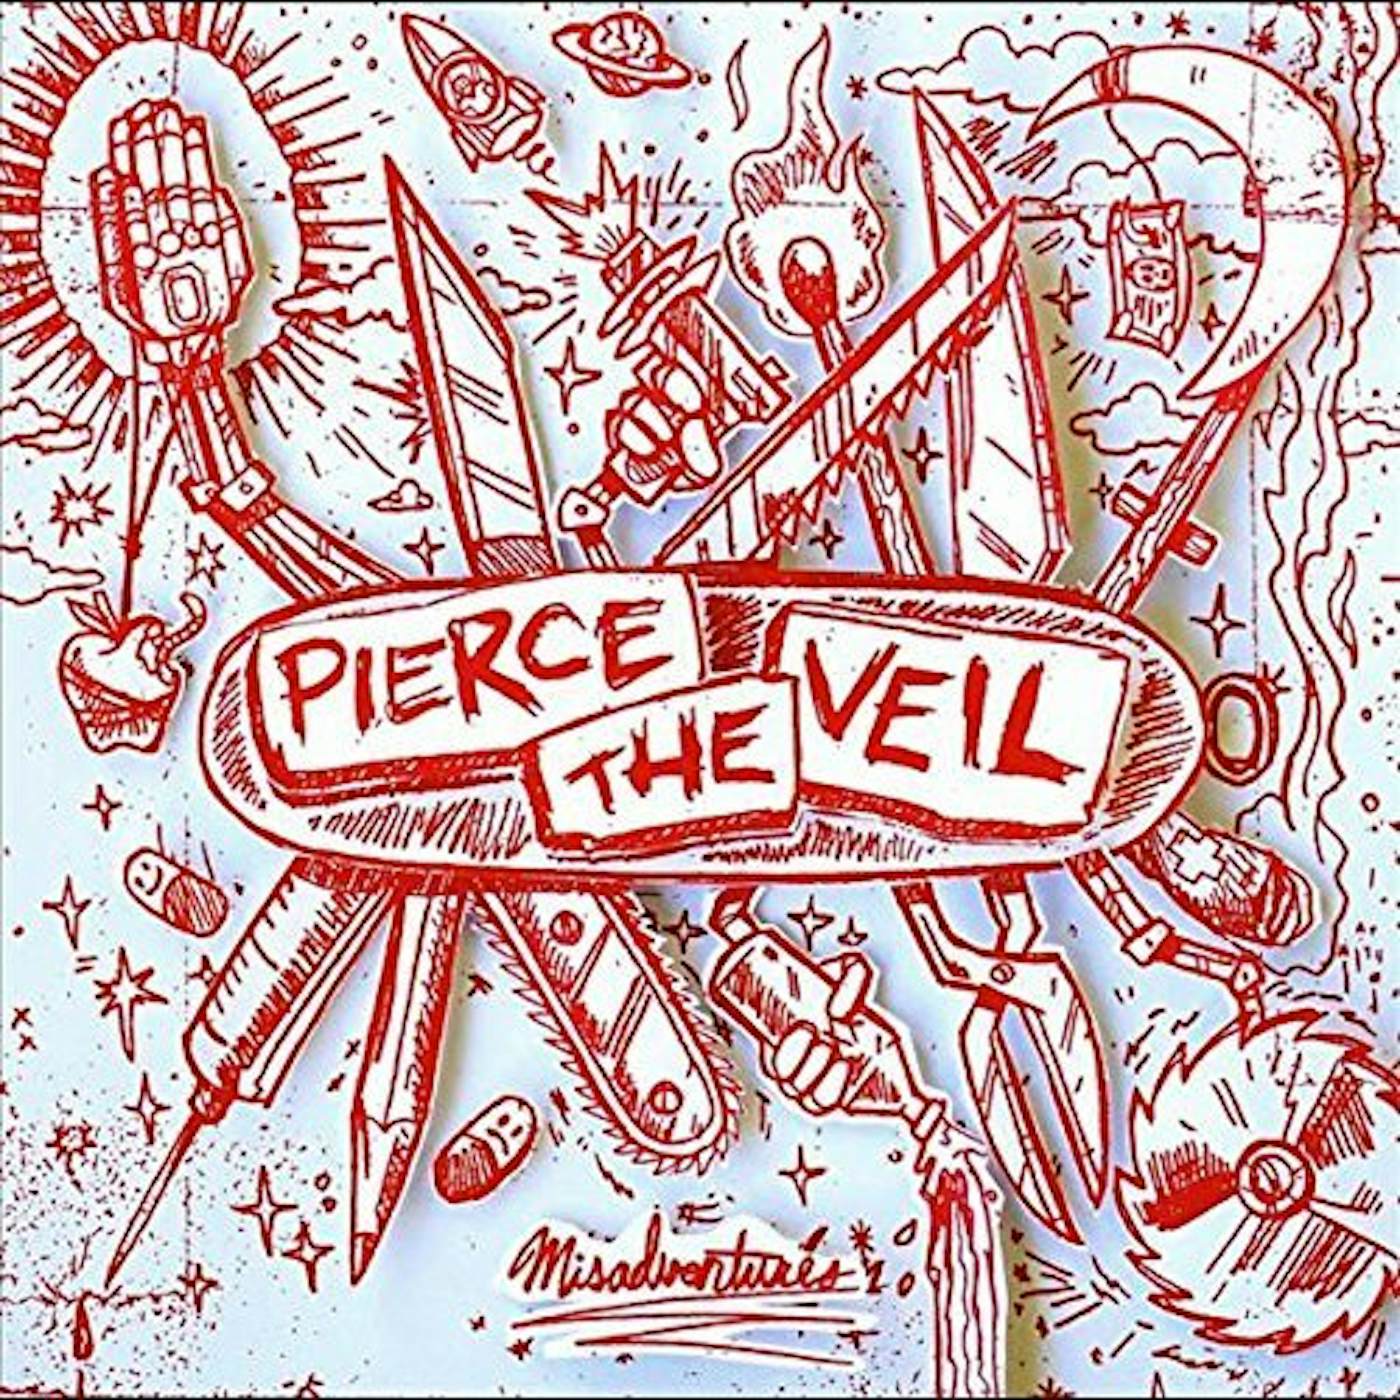 Pierce The Veil MISADVENTURES CD